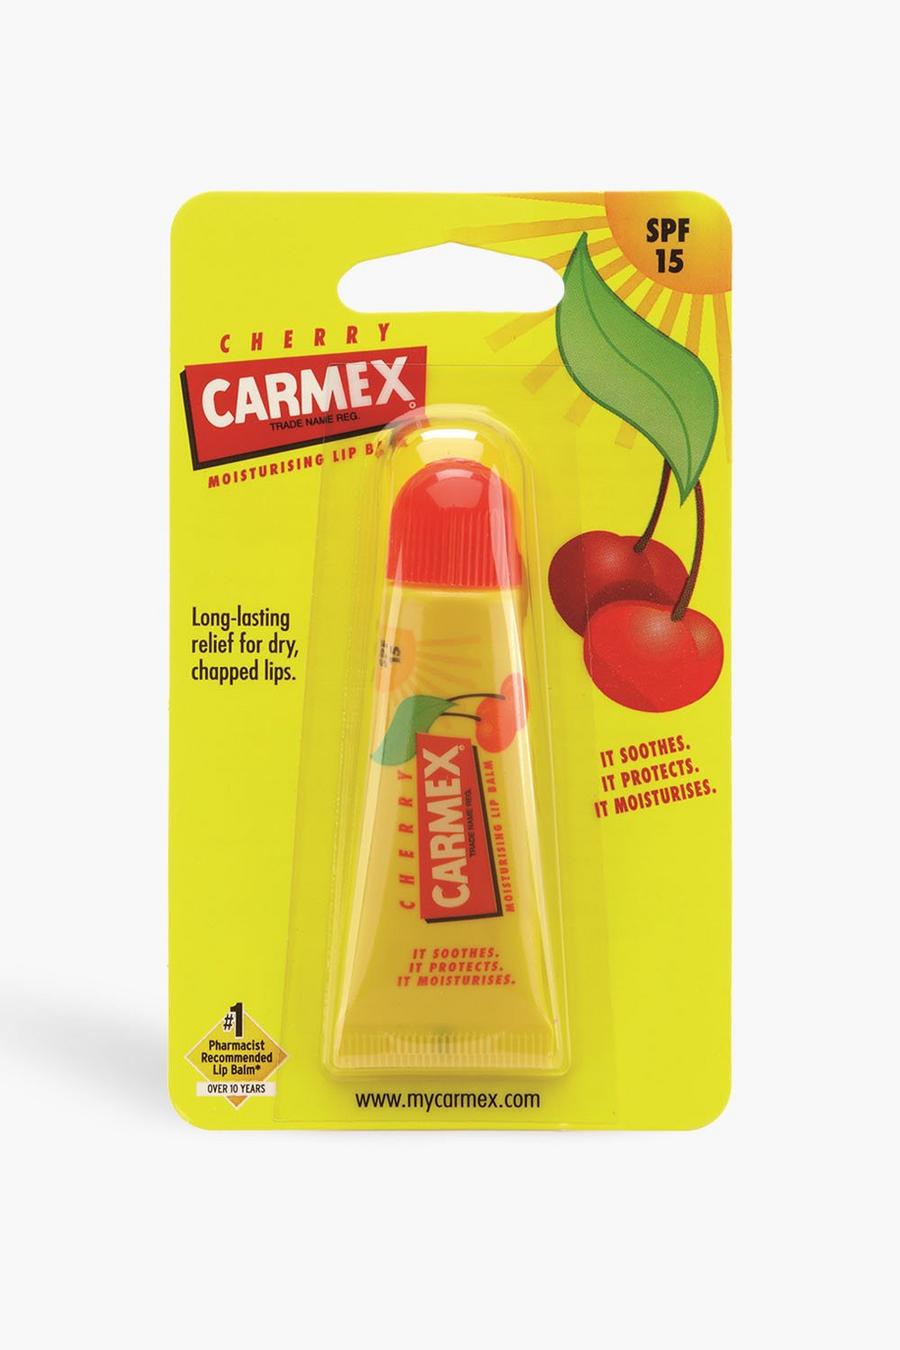 Yellow amarillo Carmex Lip Balm Cherry Tube